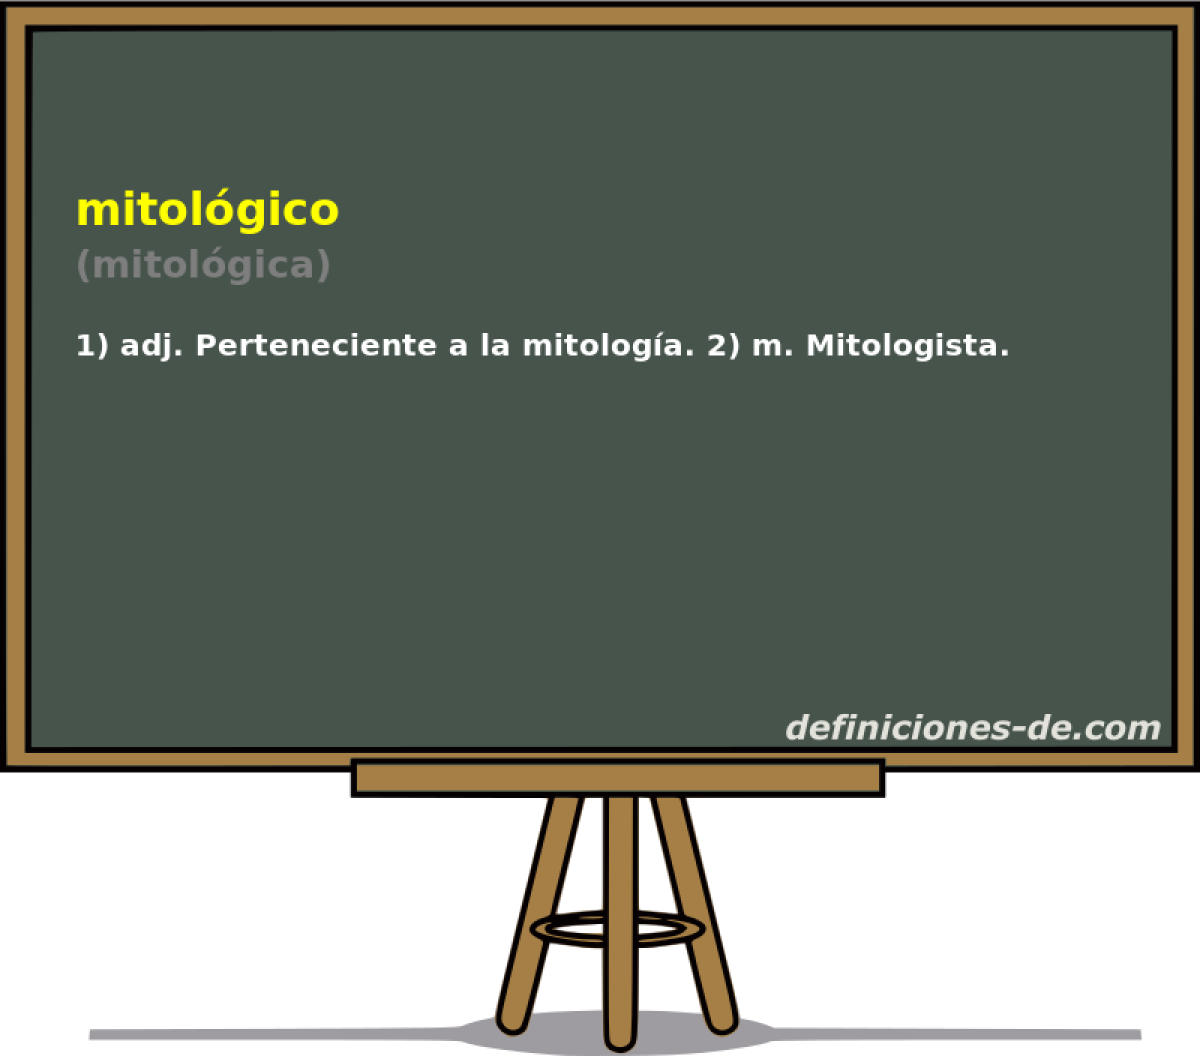 mitolgico (mitolgica)